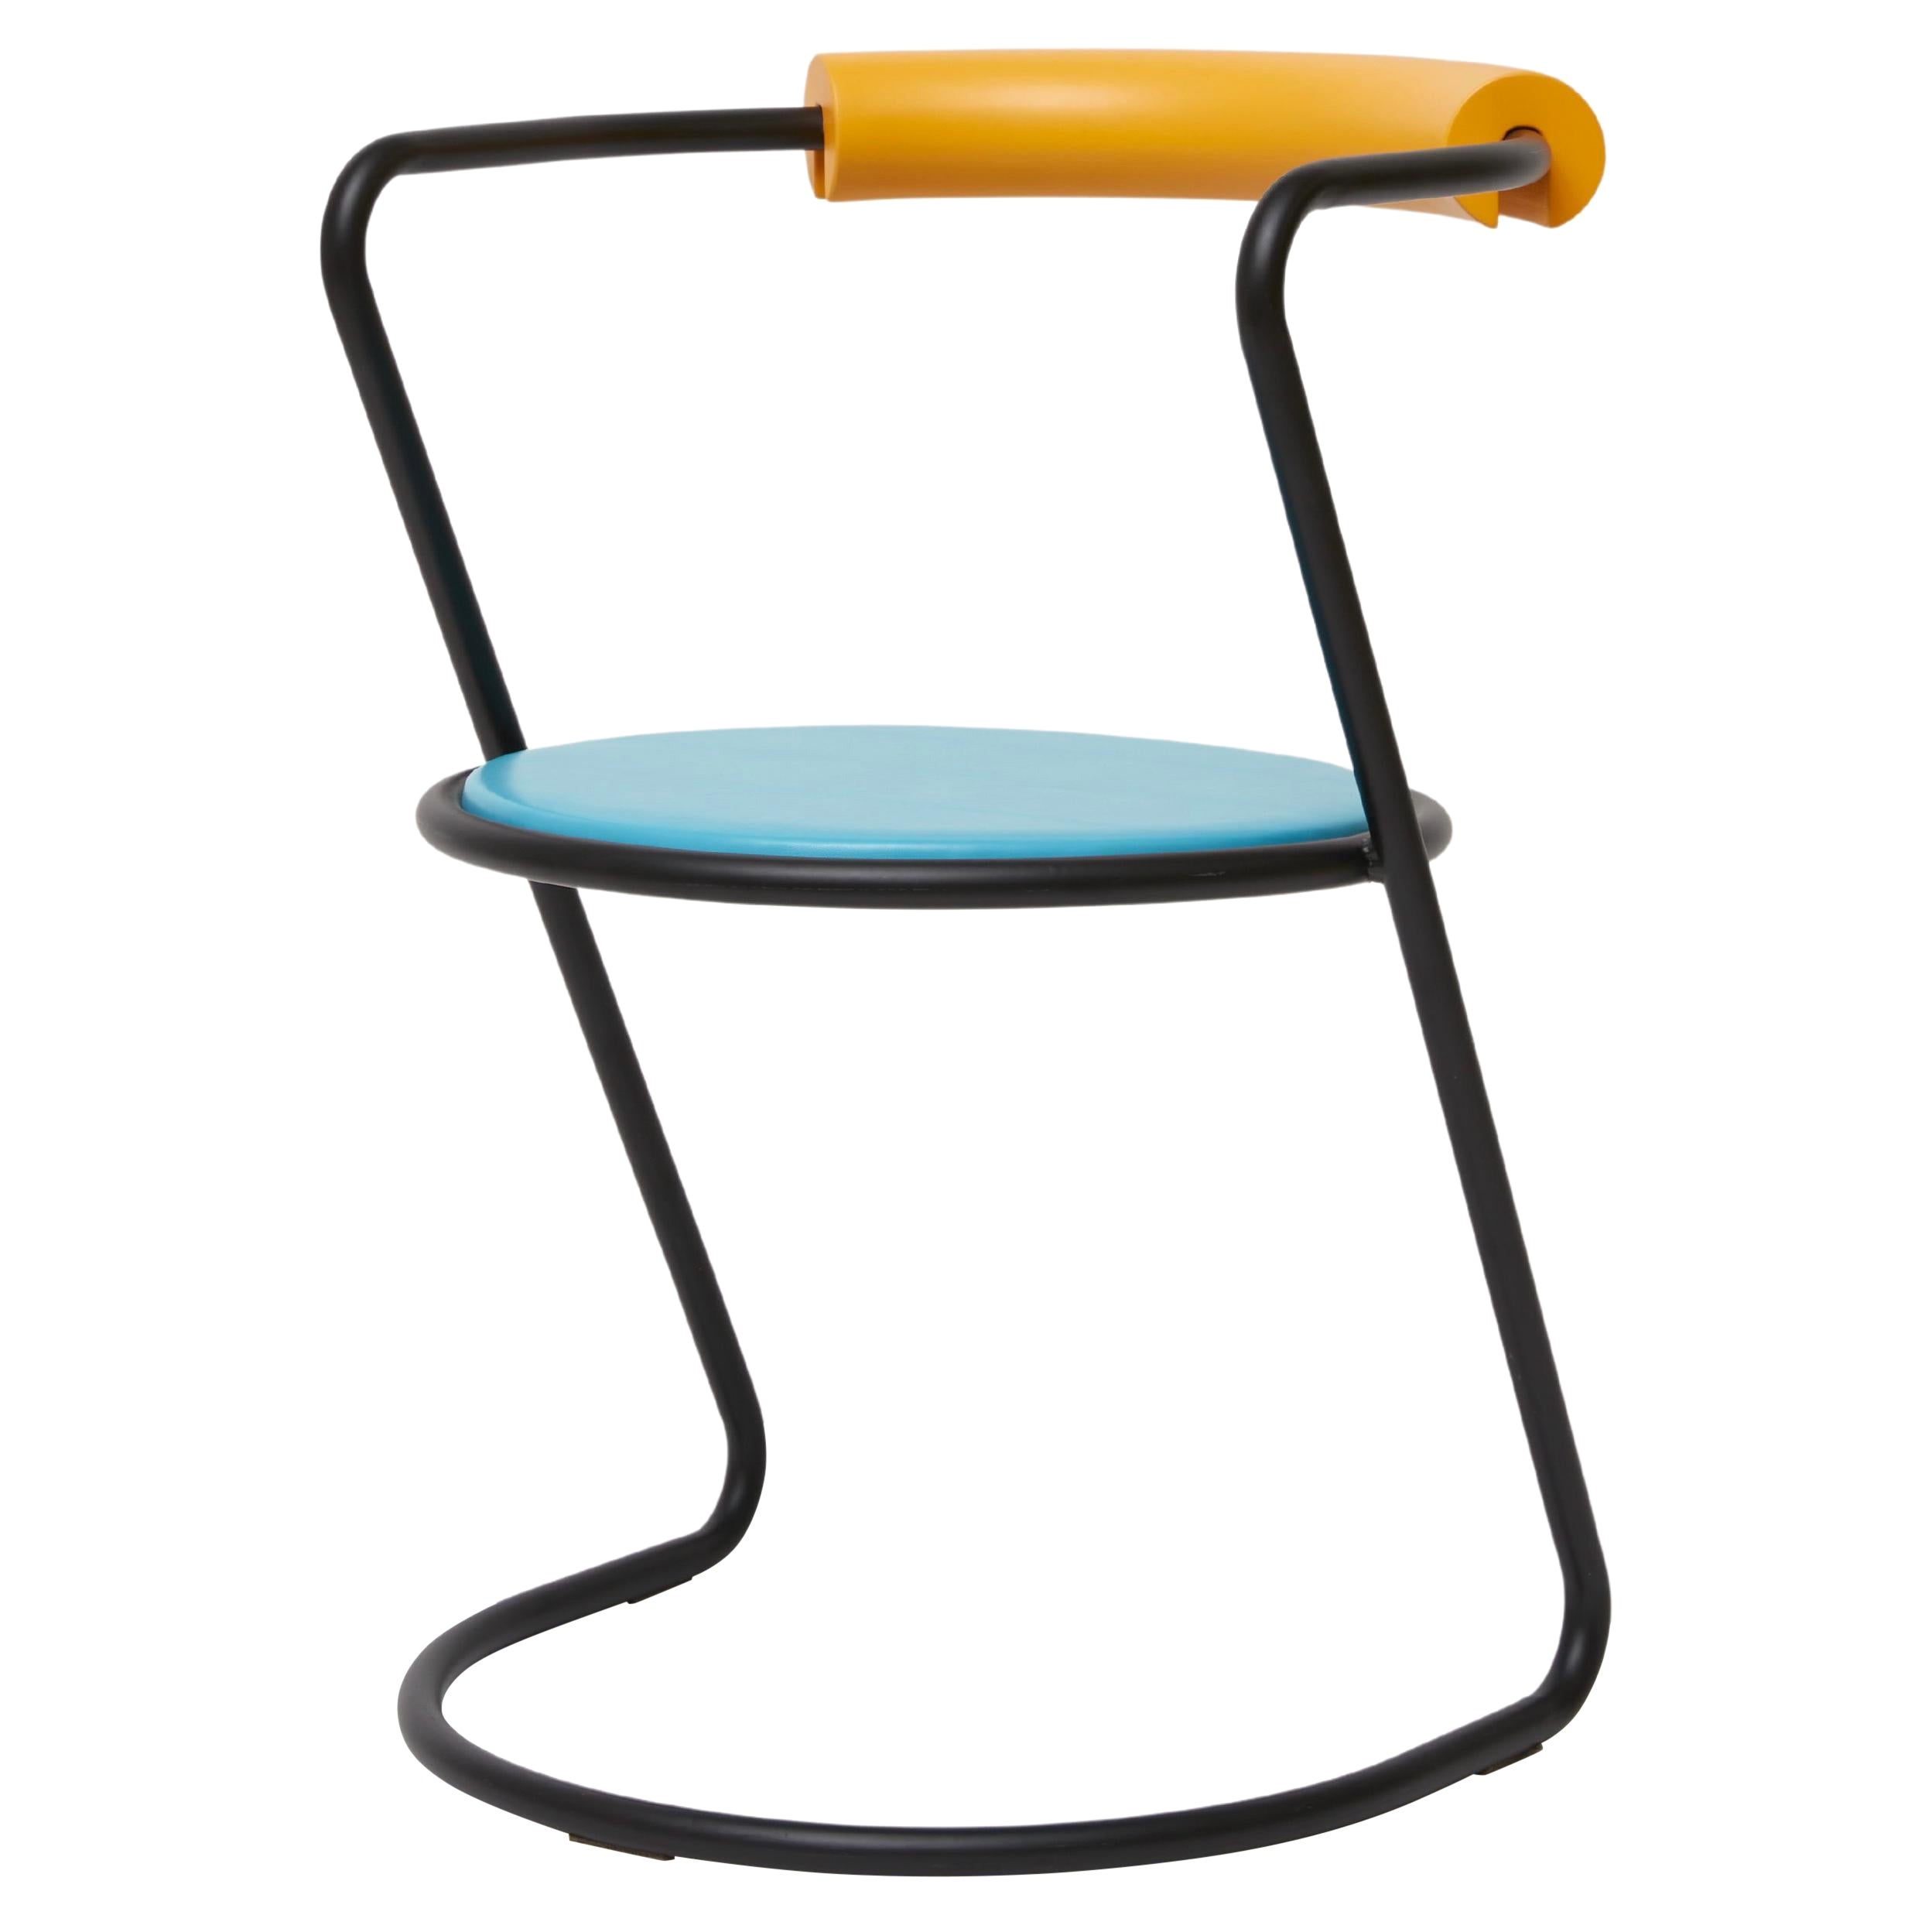 Z-Disk Chair, Black, Orange & Light Blue For Sale